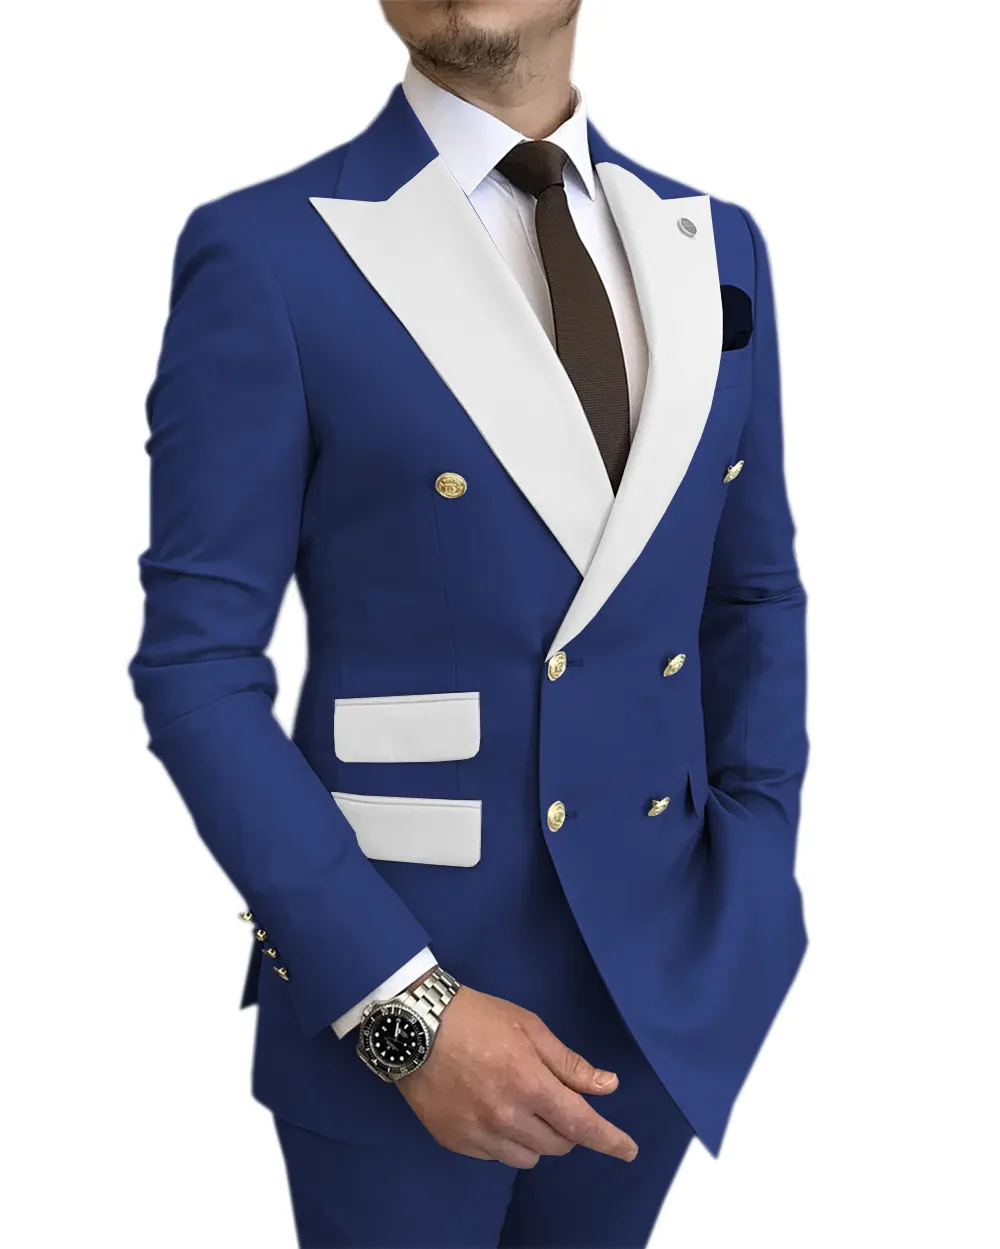 Blue New Men's Suit Slim Double-breasted White Lapel Fashion Groom Best Man Wedding Party Business Suits Classic Suits 2PCS